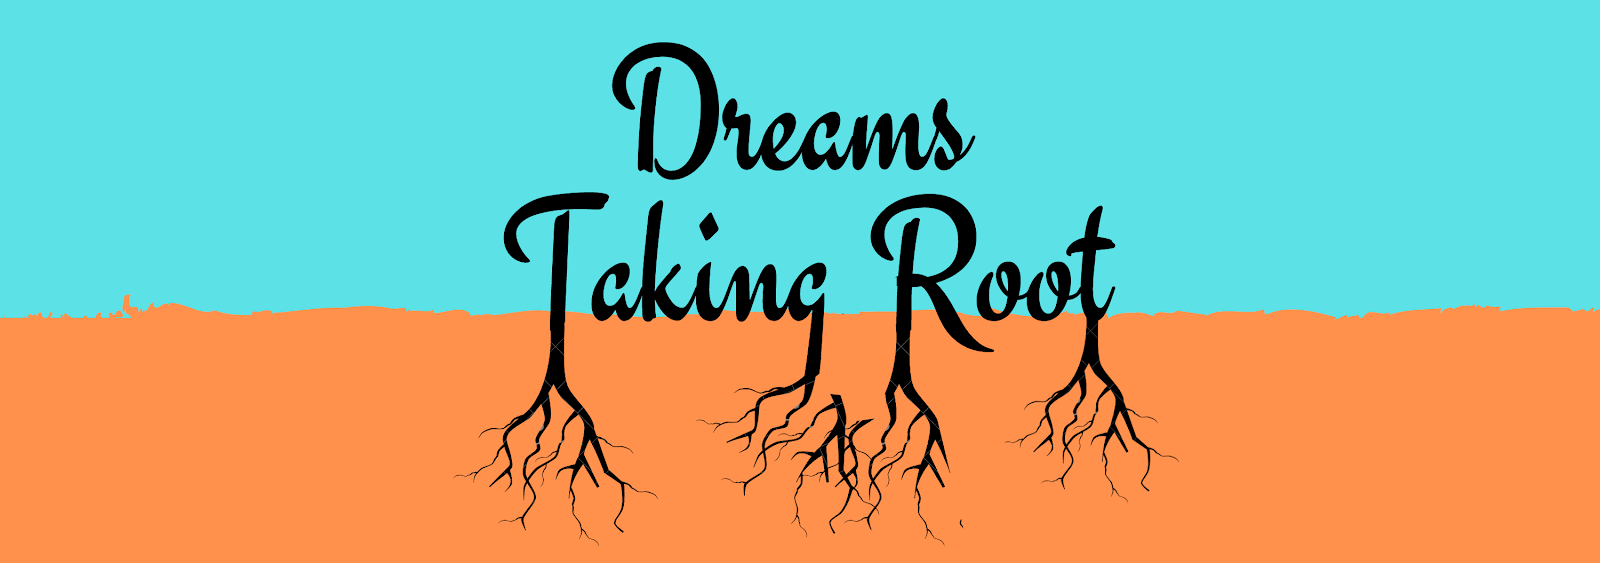 Dreams Taking Root